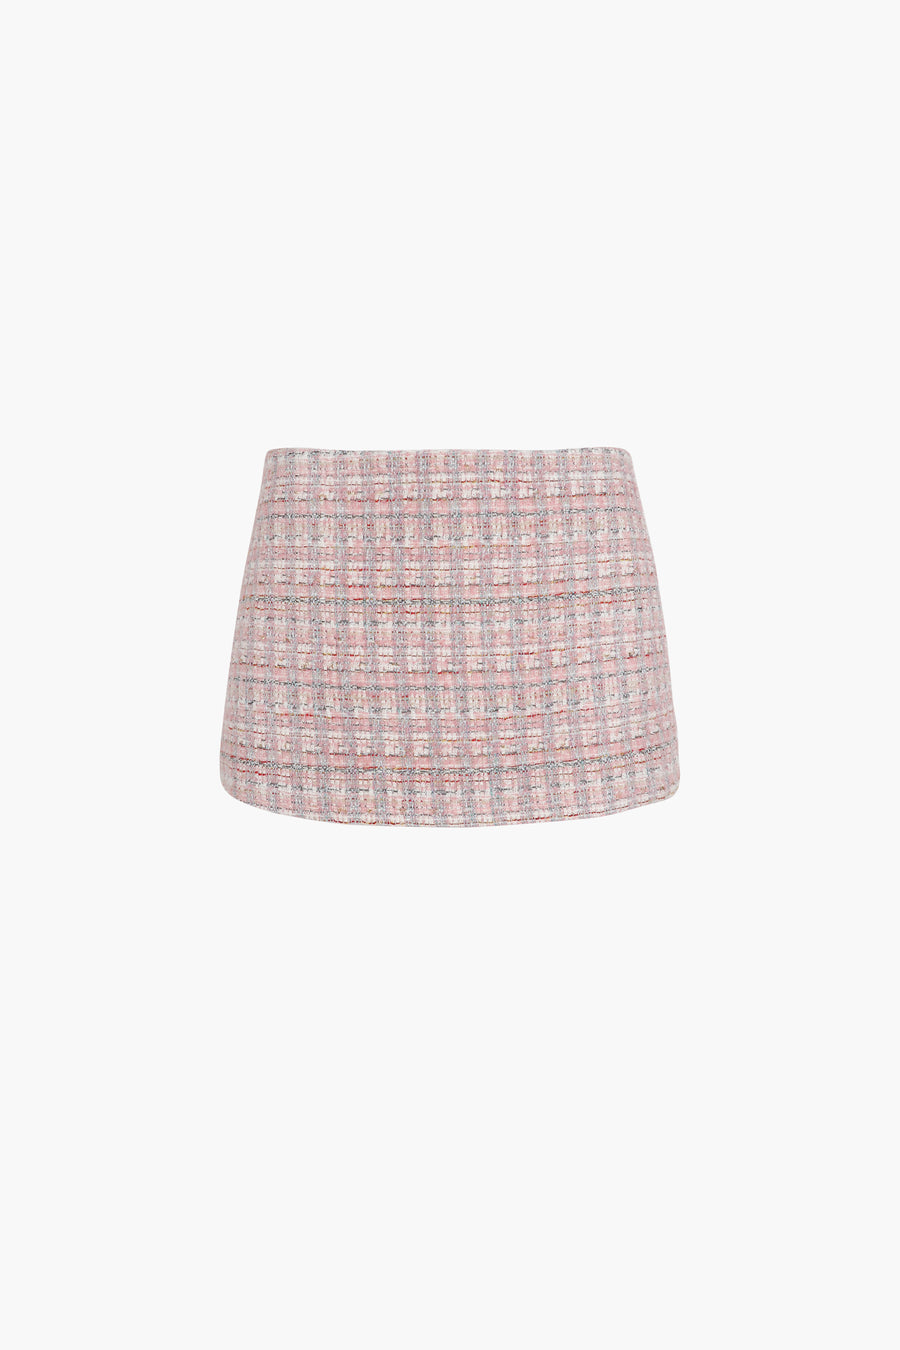 Mini pink and cream tweed skirt